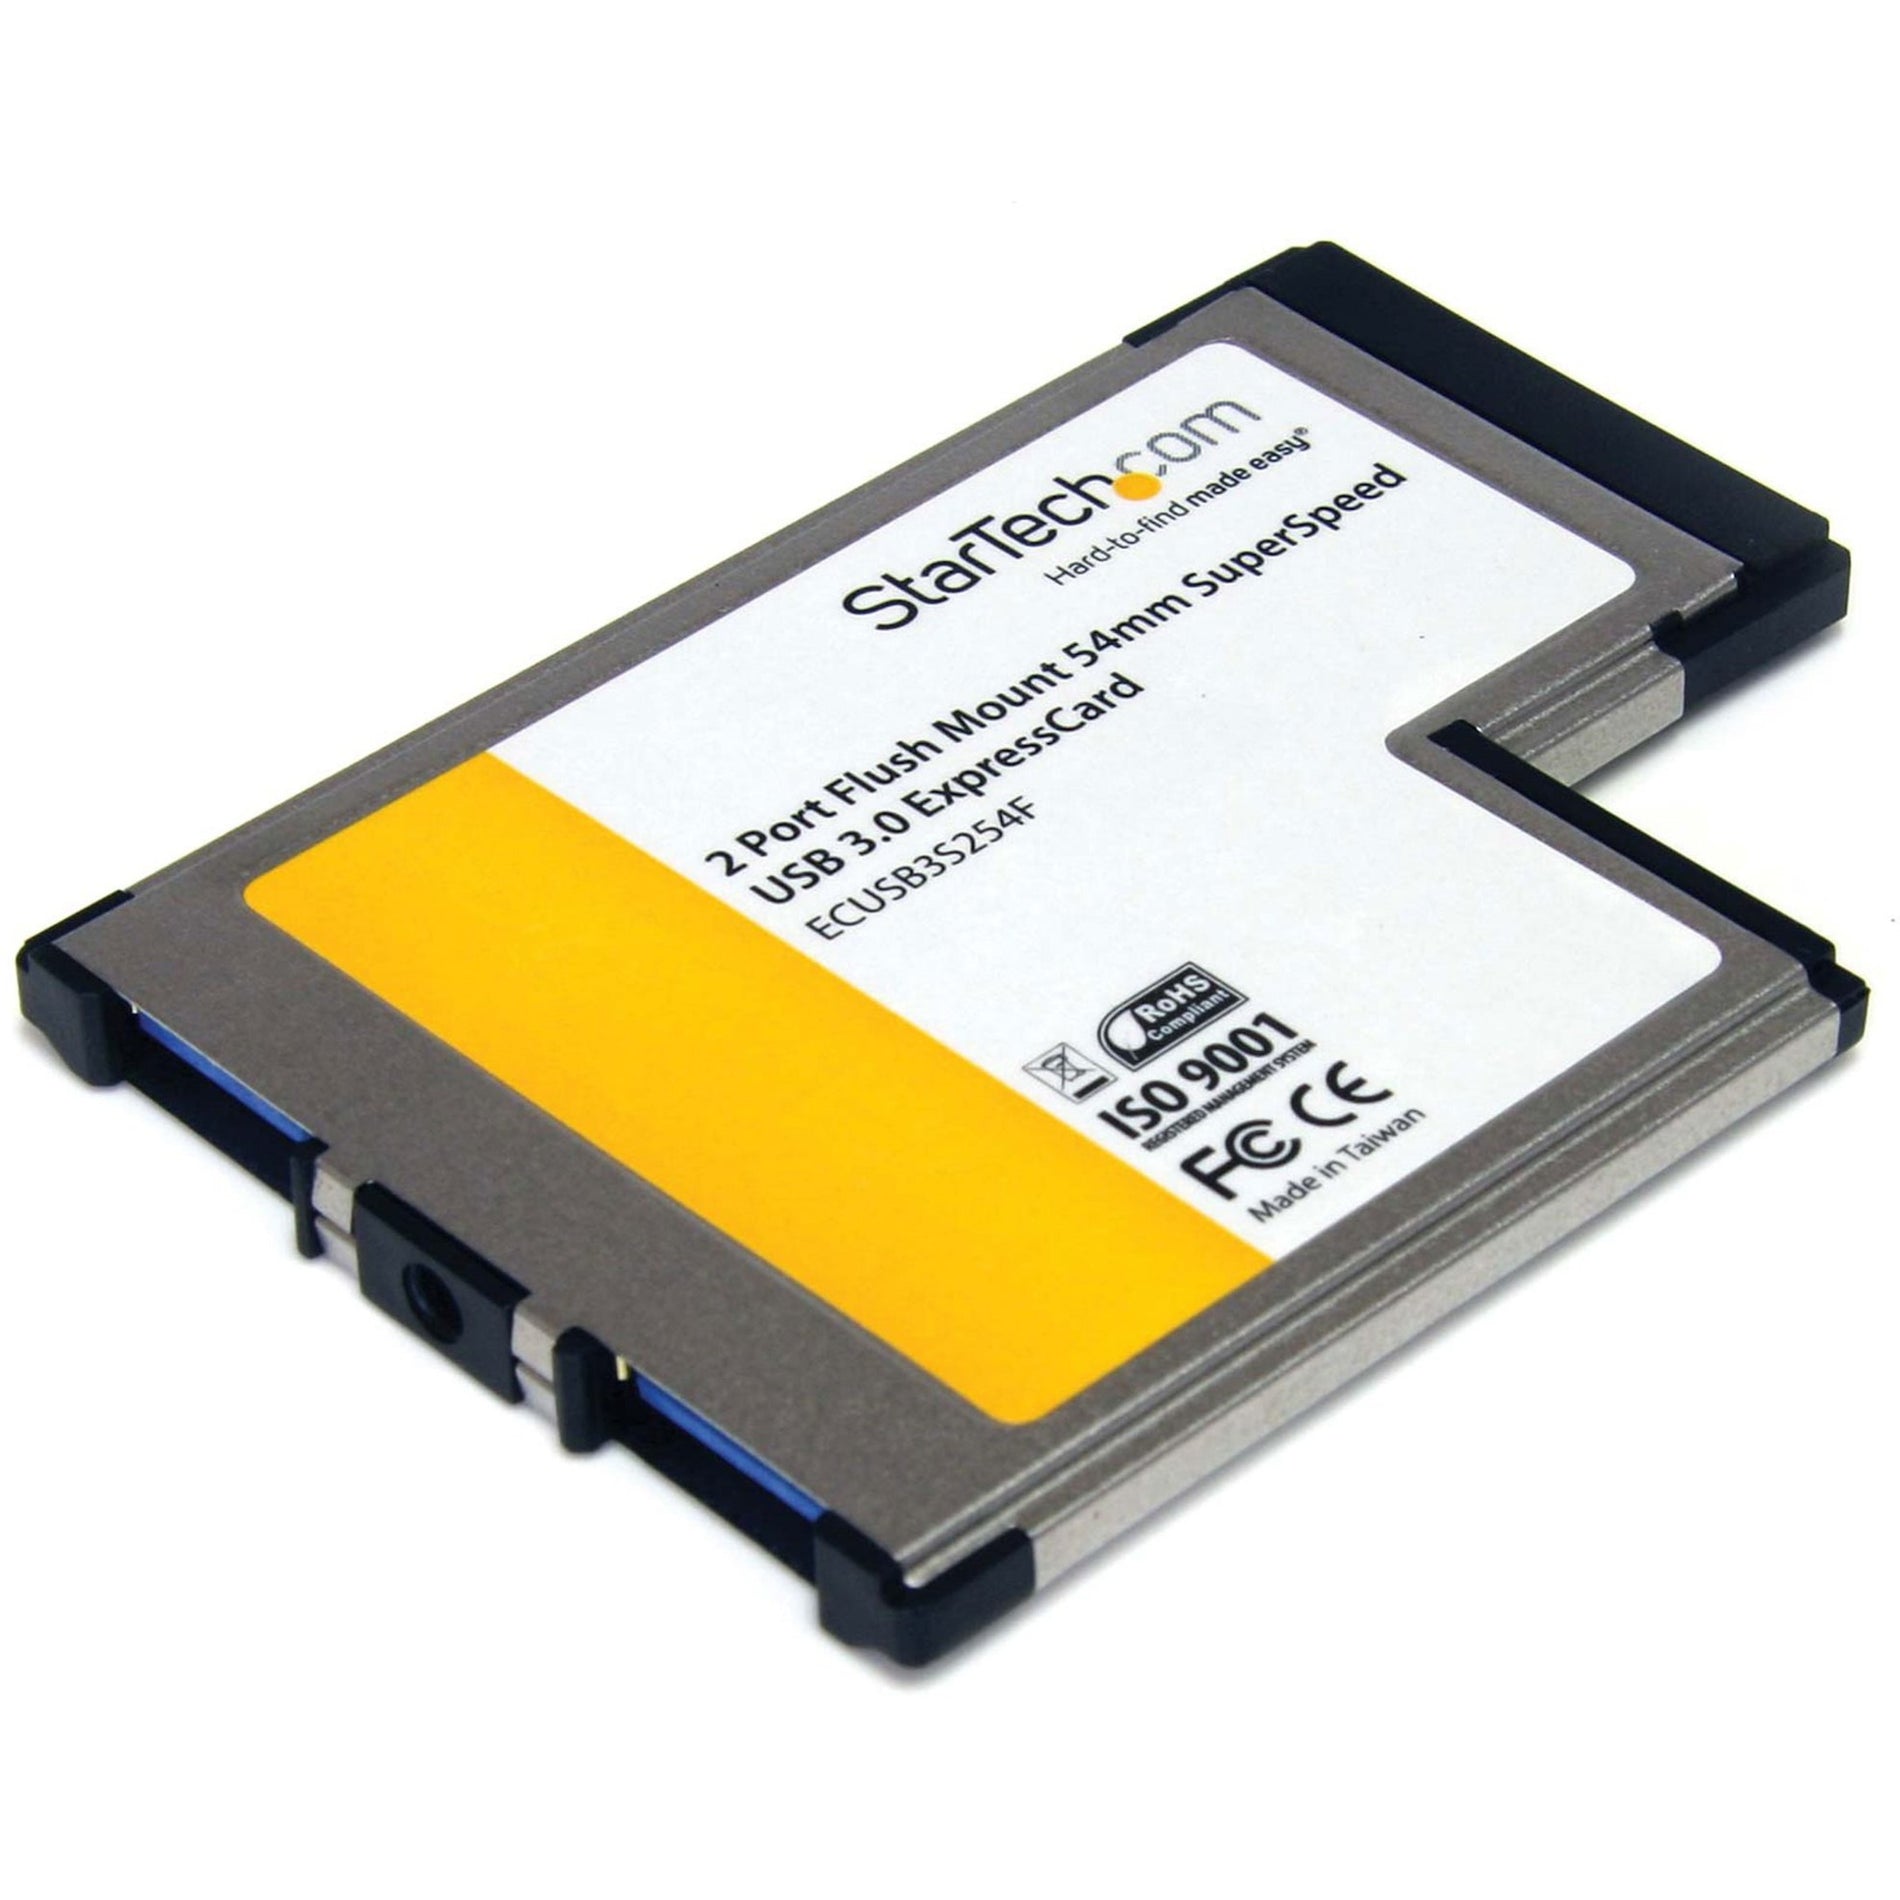 StarTech.com ECUSB3S254F 2 Port Flush Mount ExpressCard 54mm SuperSpeed USB 3.0 Card Adapter, TAA Compliant, 2 Year Warranty